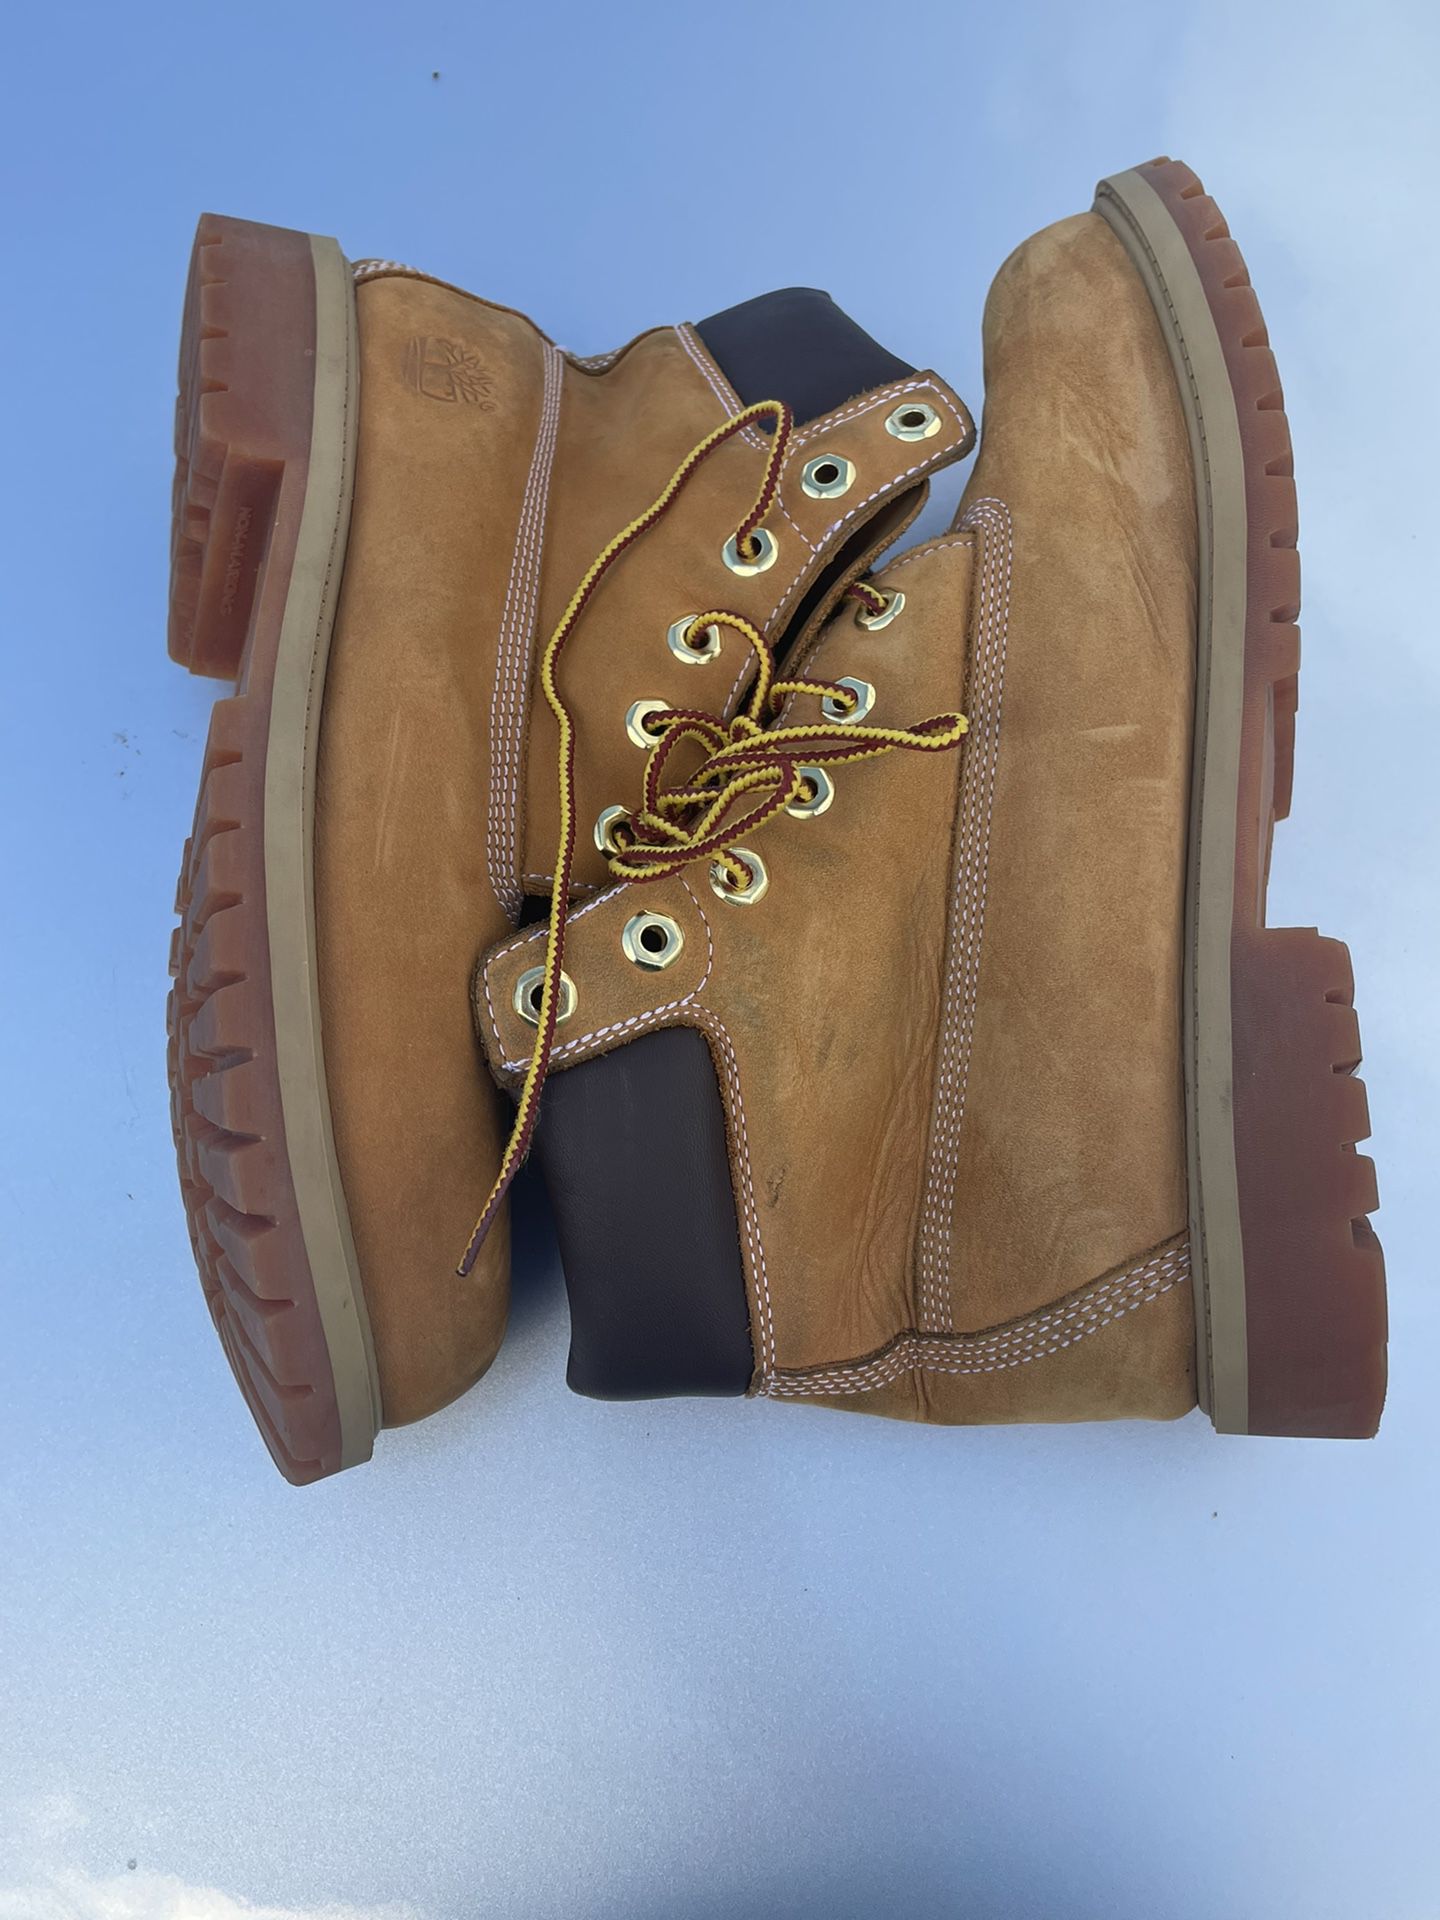 Timberland Boots Size 6.5